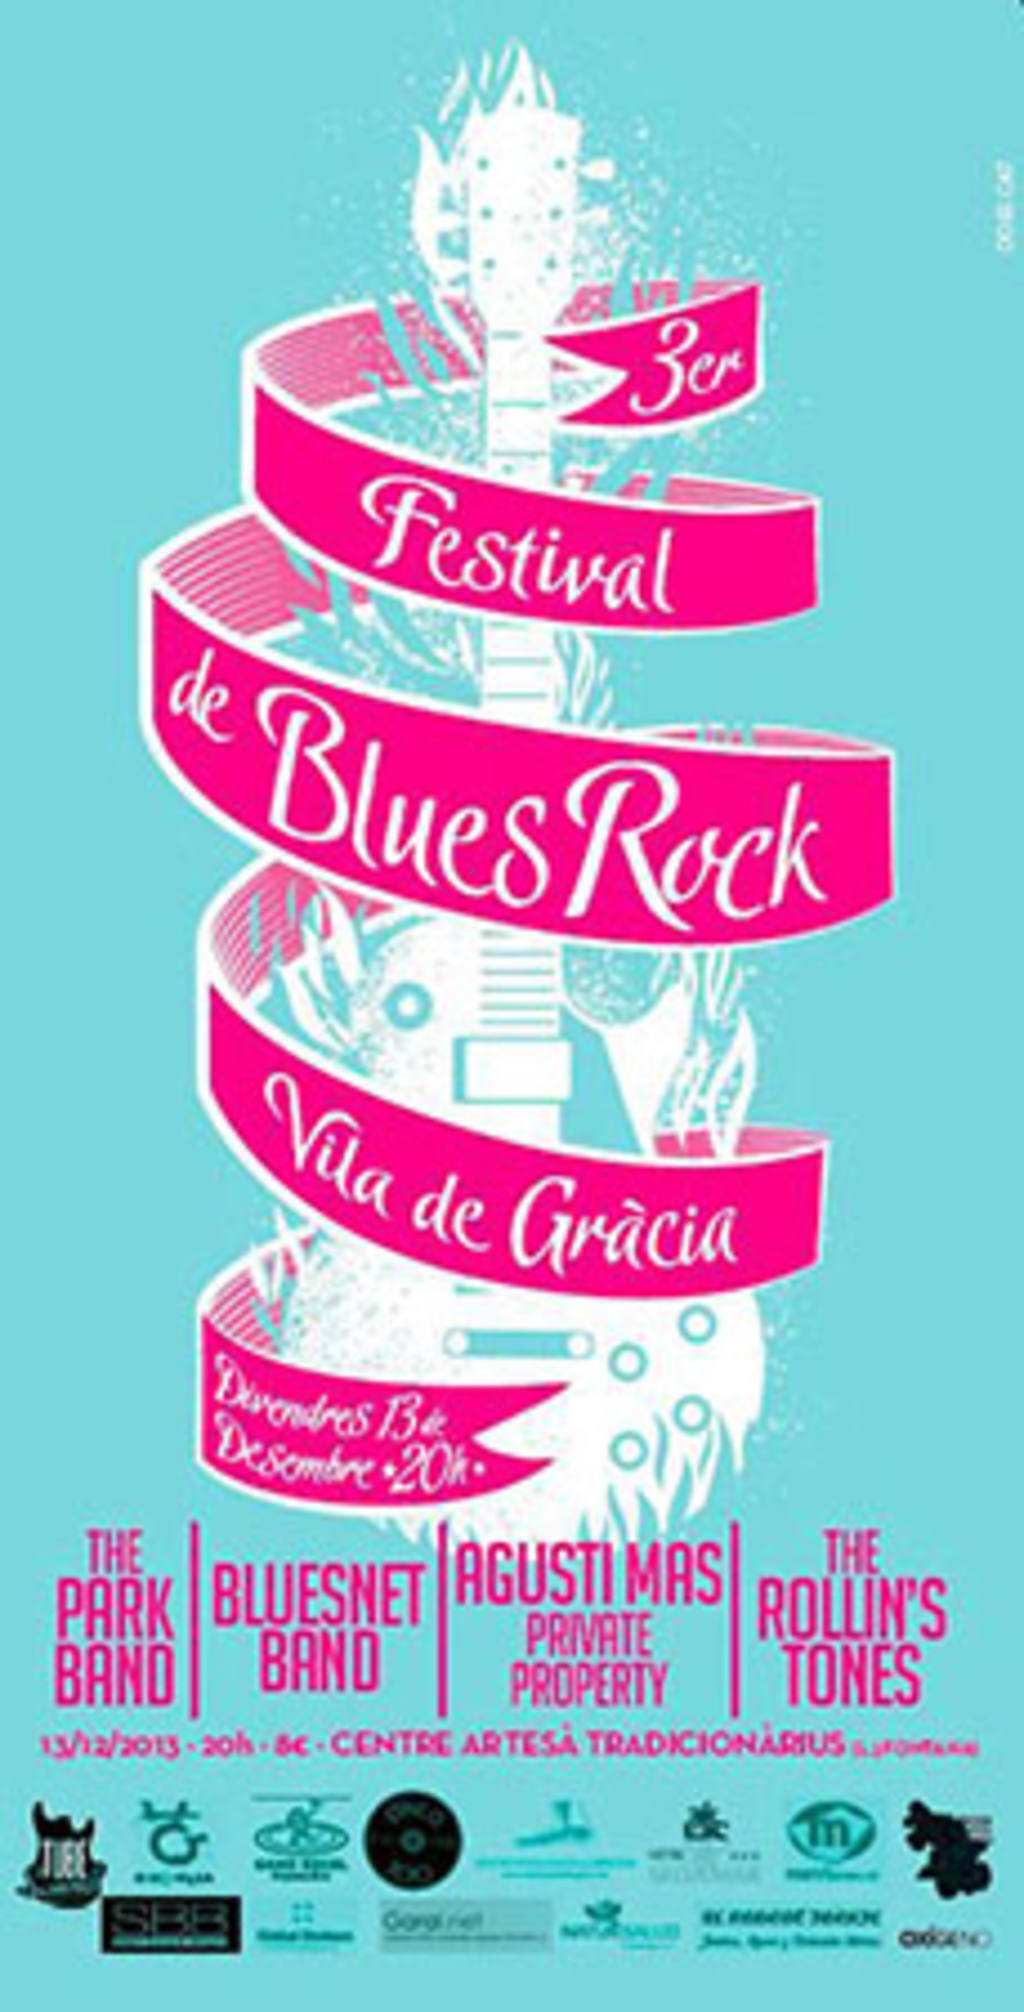 festival blues rock Vila de Gracia-Gastronosfera